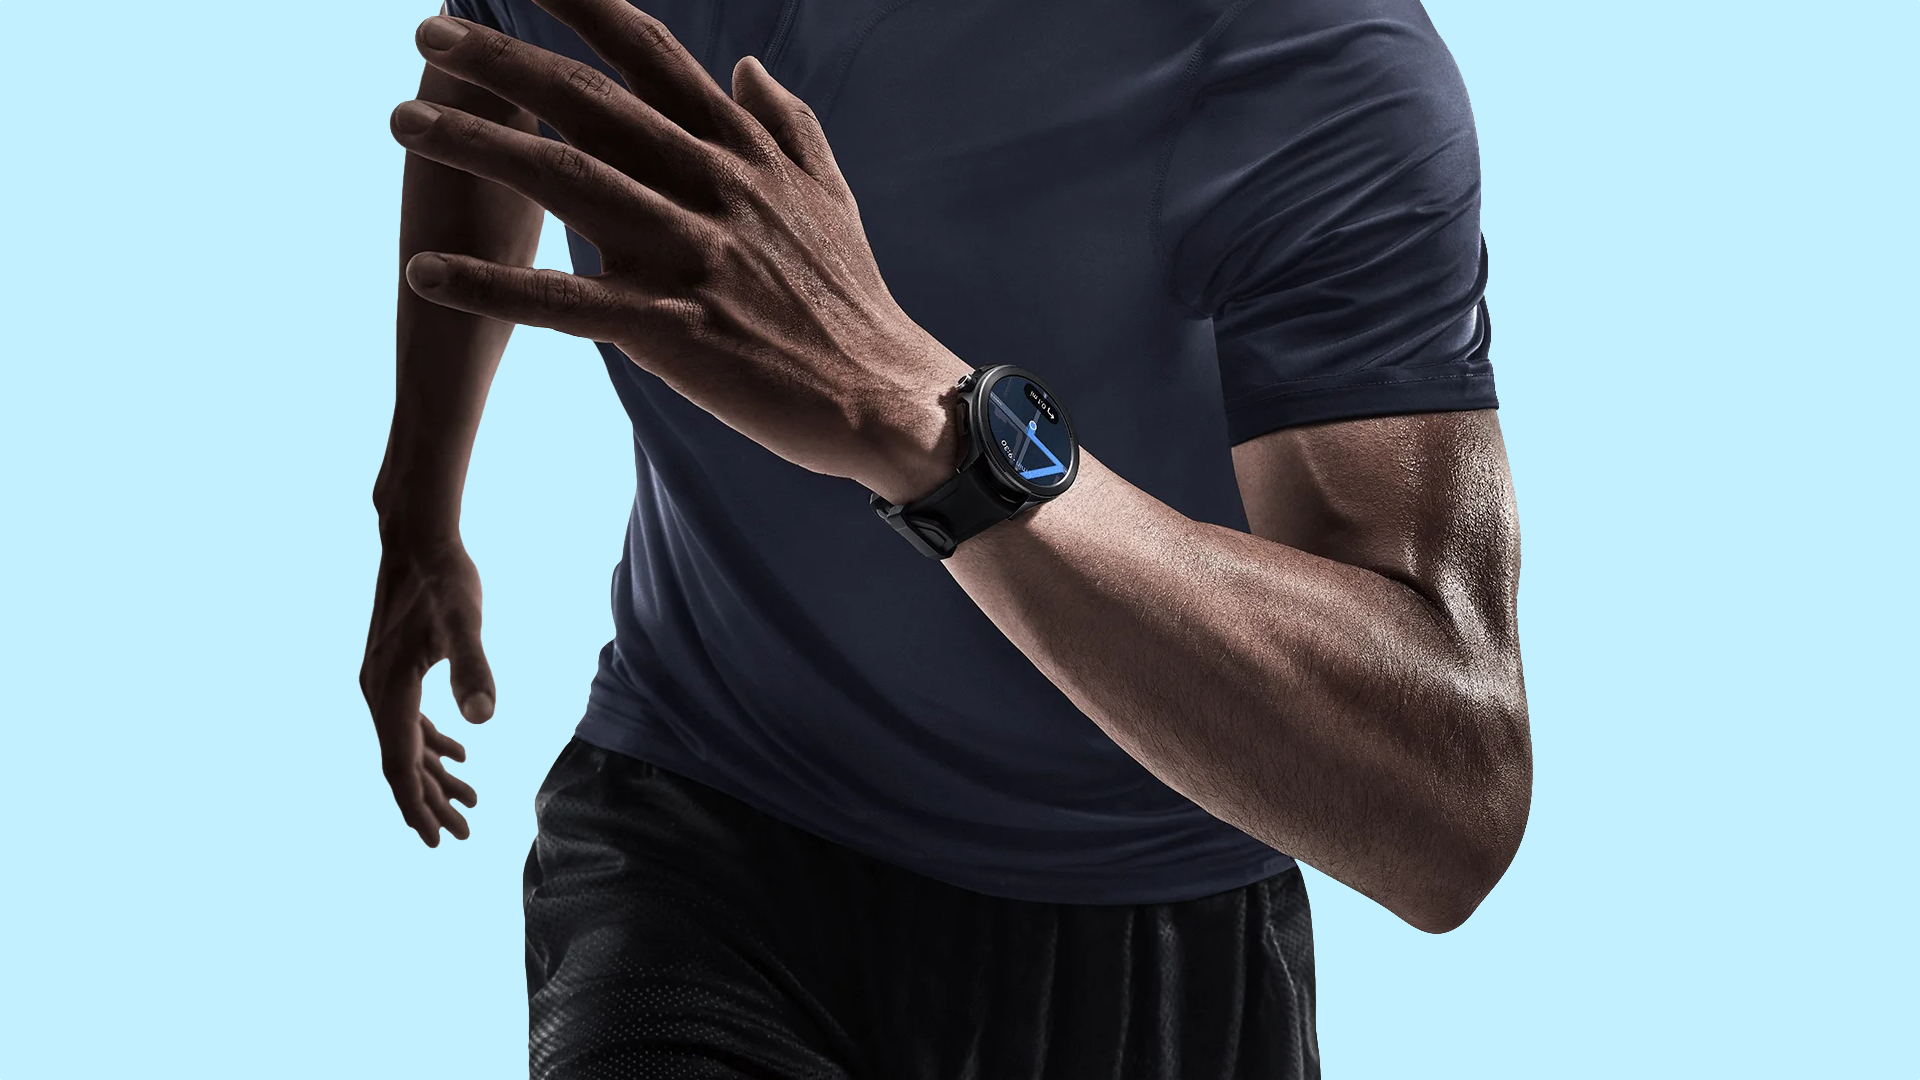 Next OnePlus smartwatch may switch to Google's Wear OS